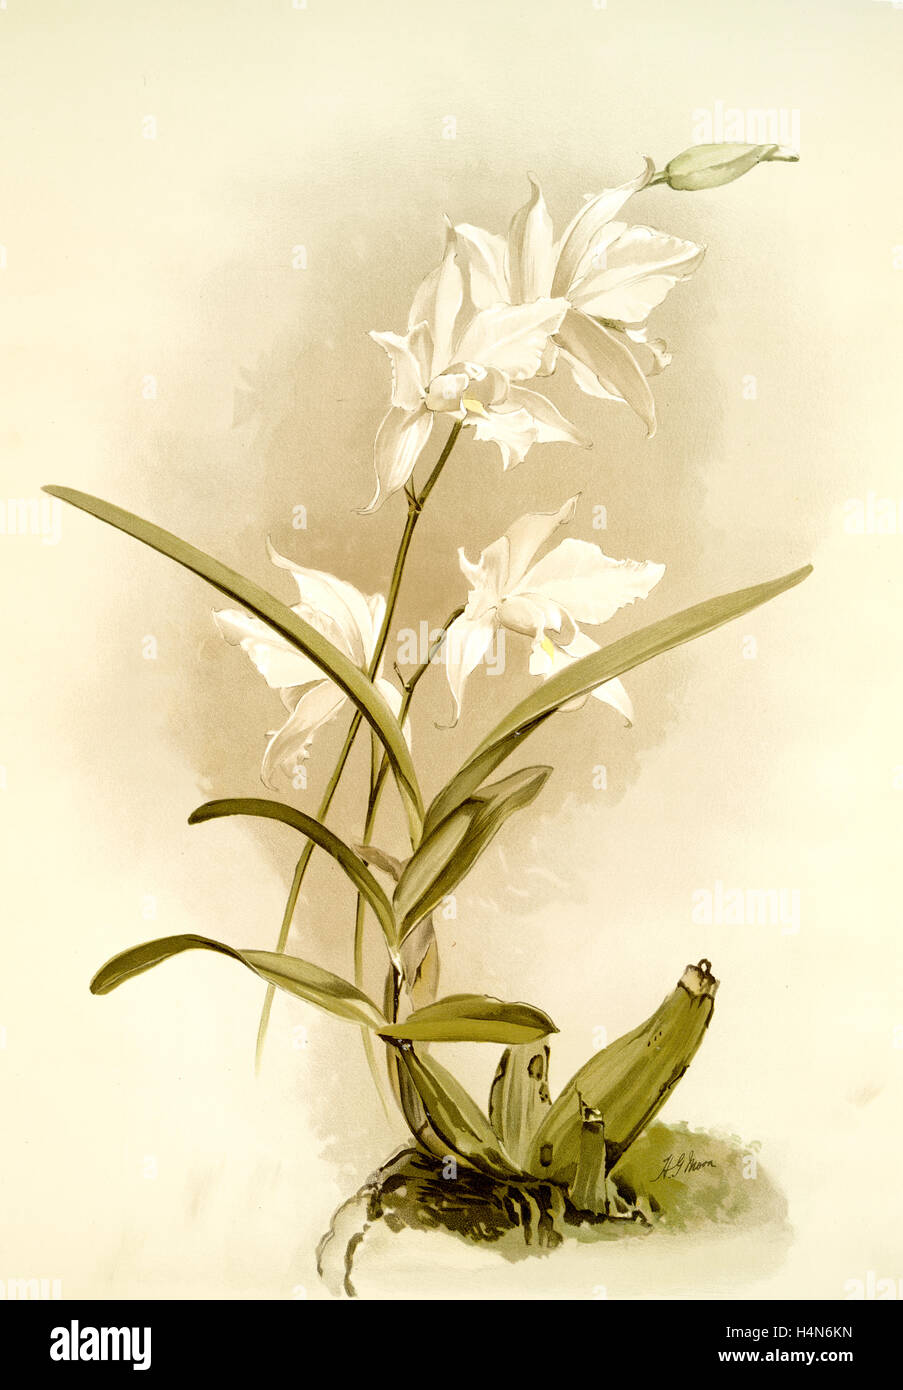 Laelia autumnalis alba, Sander, F. (Frederick), 1847-1920, Mansell, Joseph, Lithographer, Moon, H. G Stock Photo